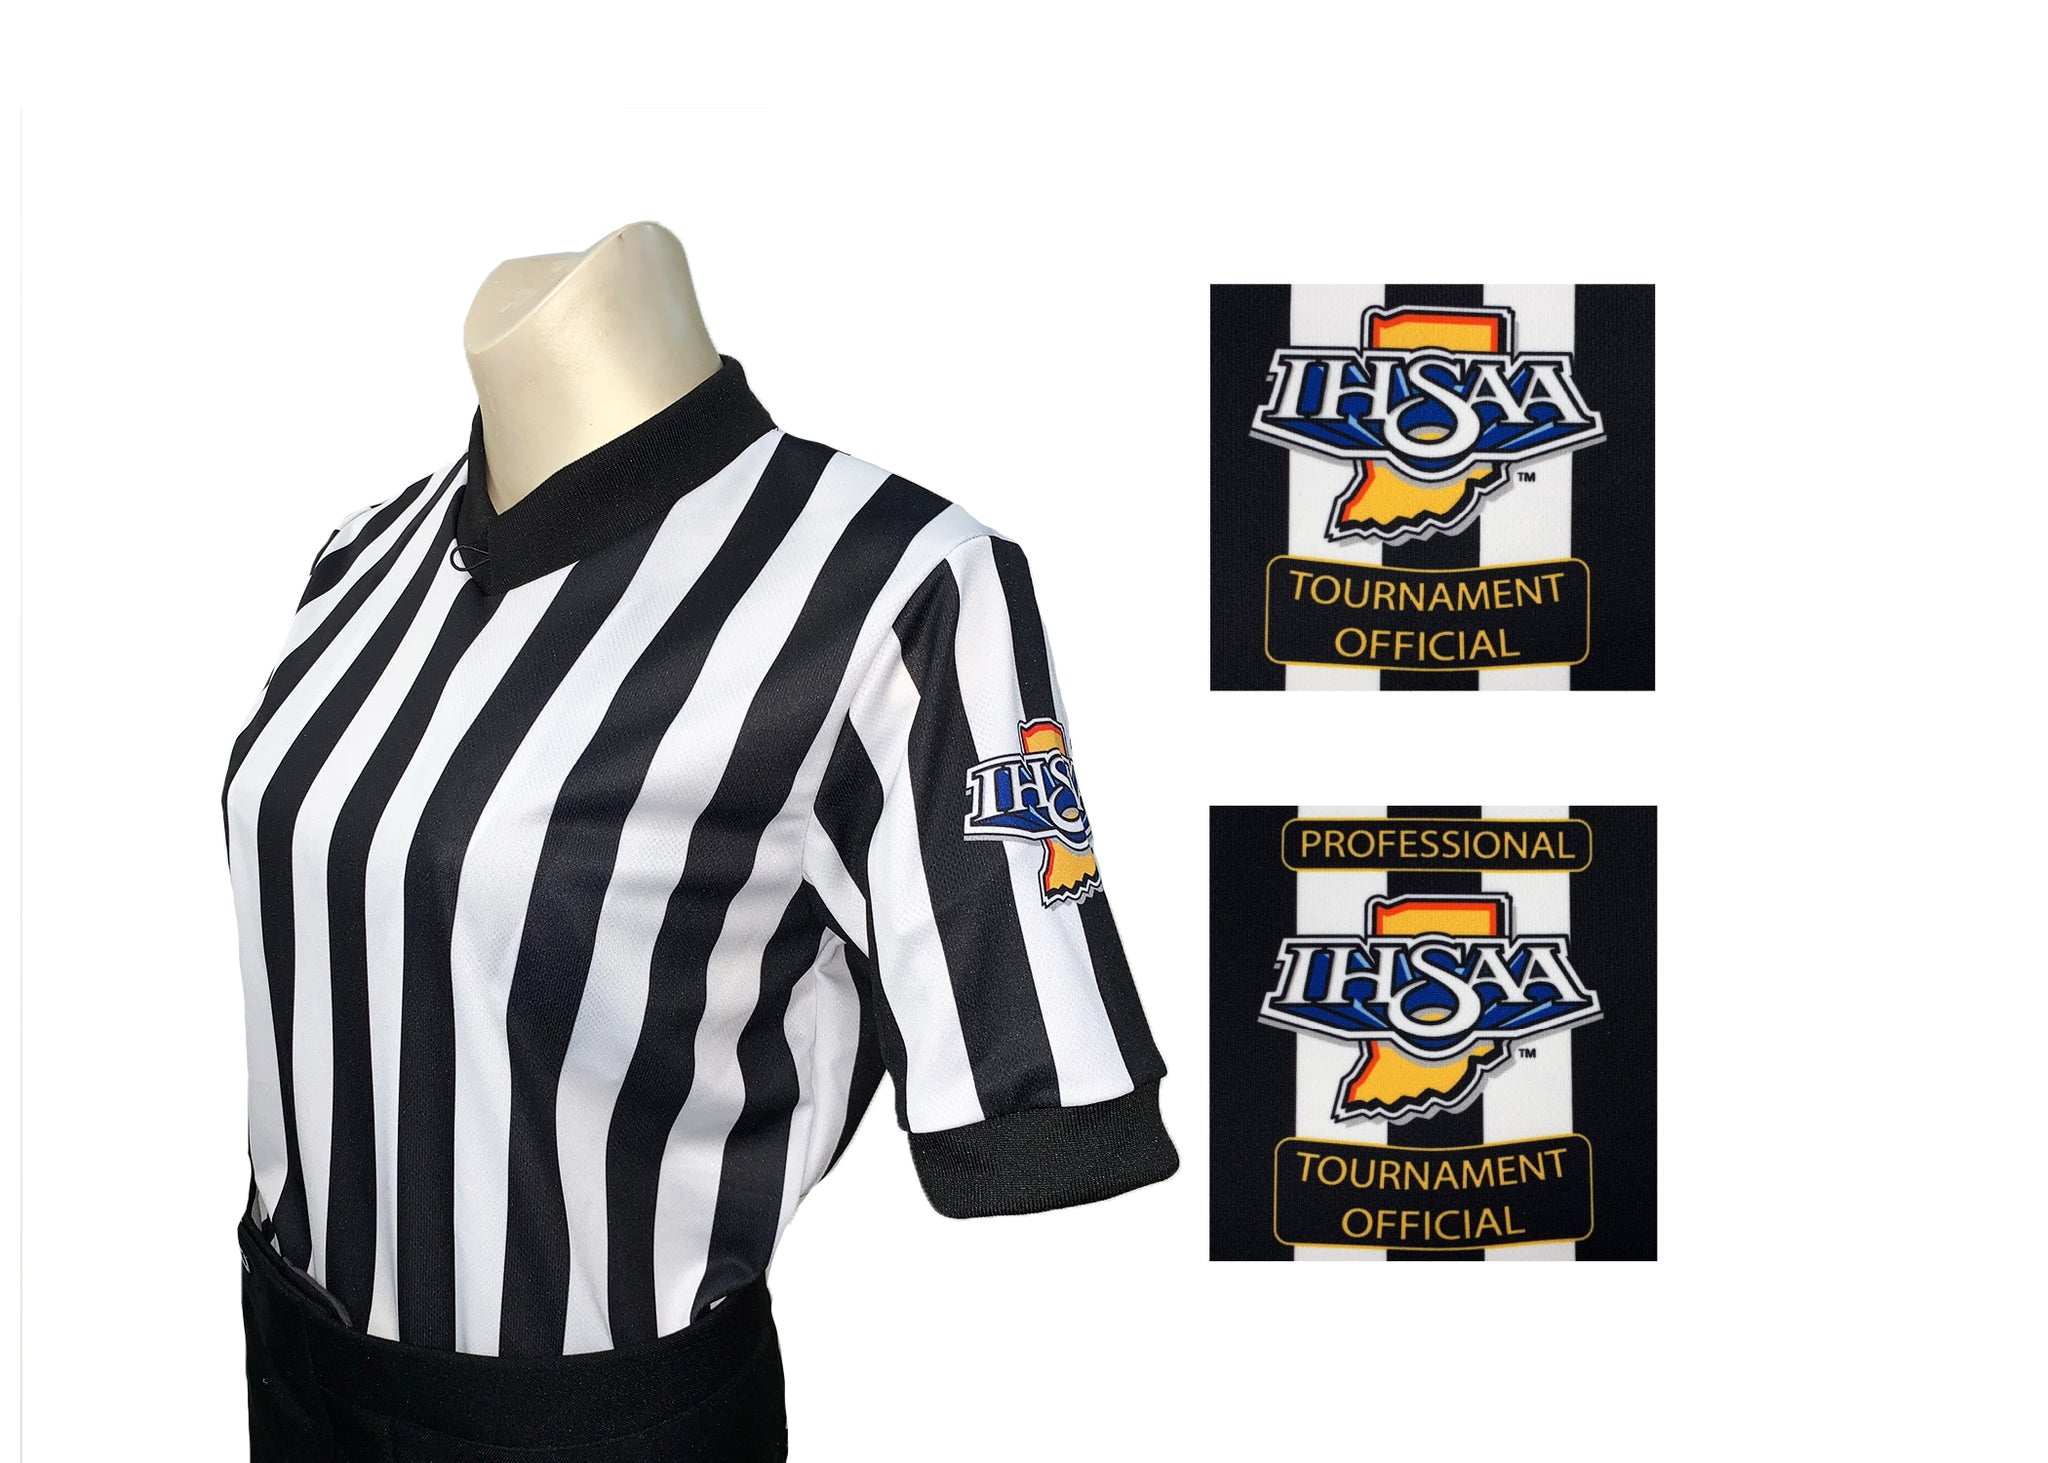 USA211IN-607 - Smitty "Made in USA" - "BODY FLEX" "IHSAA" V-Neck Women's Basketball Shirt